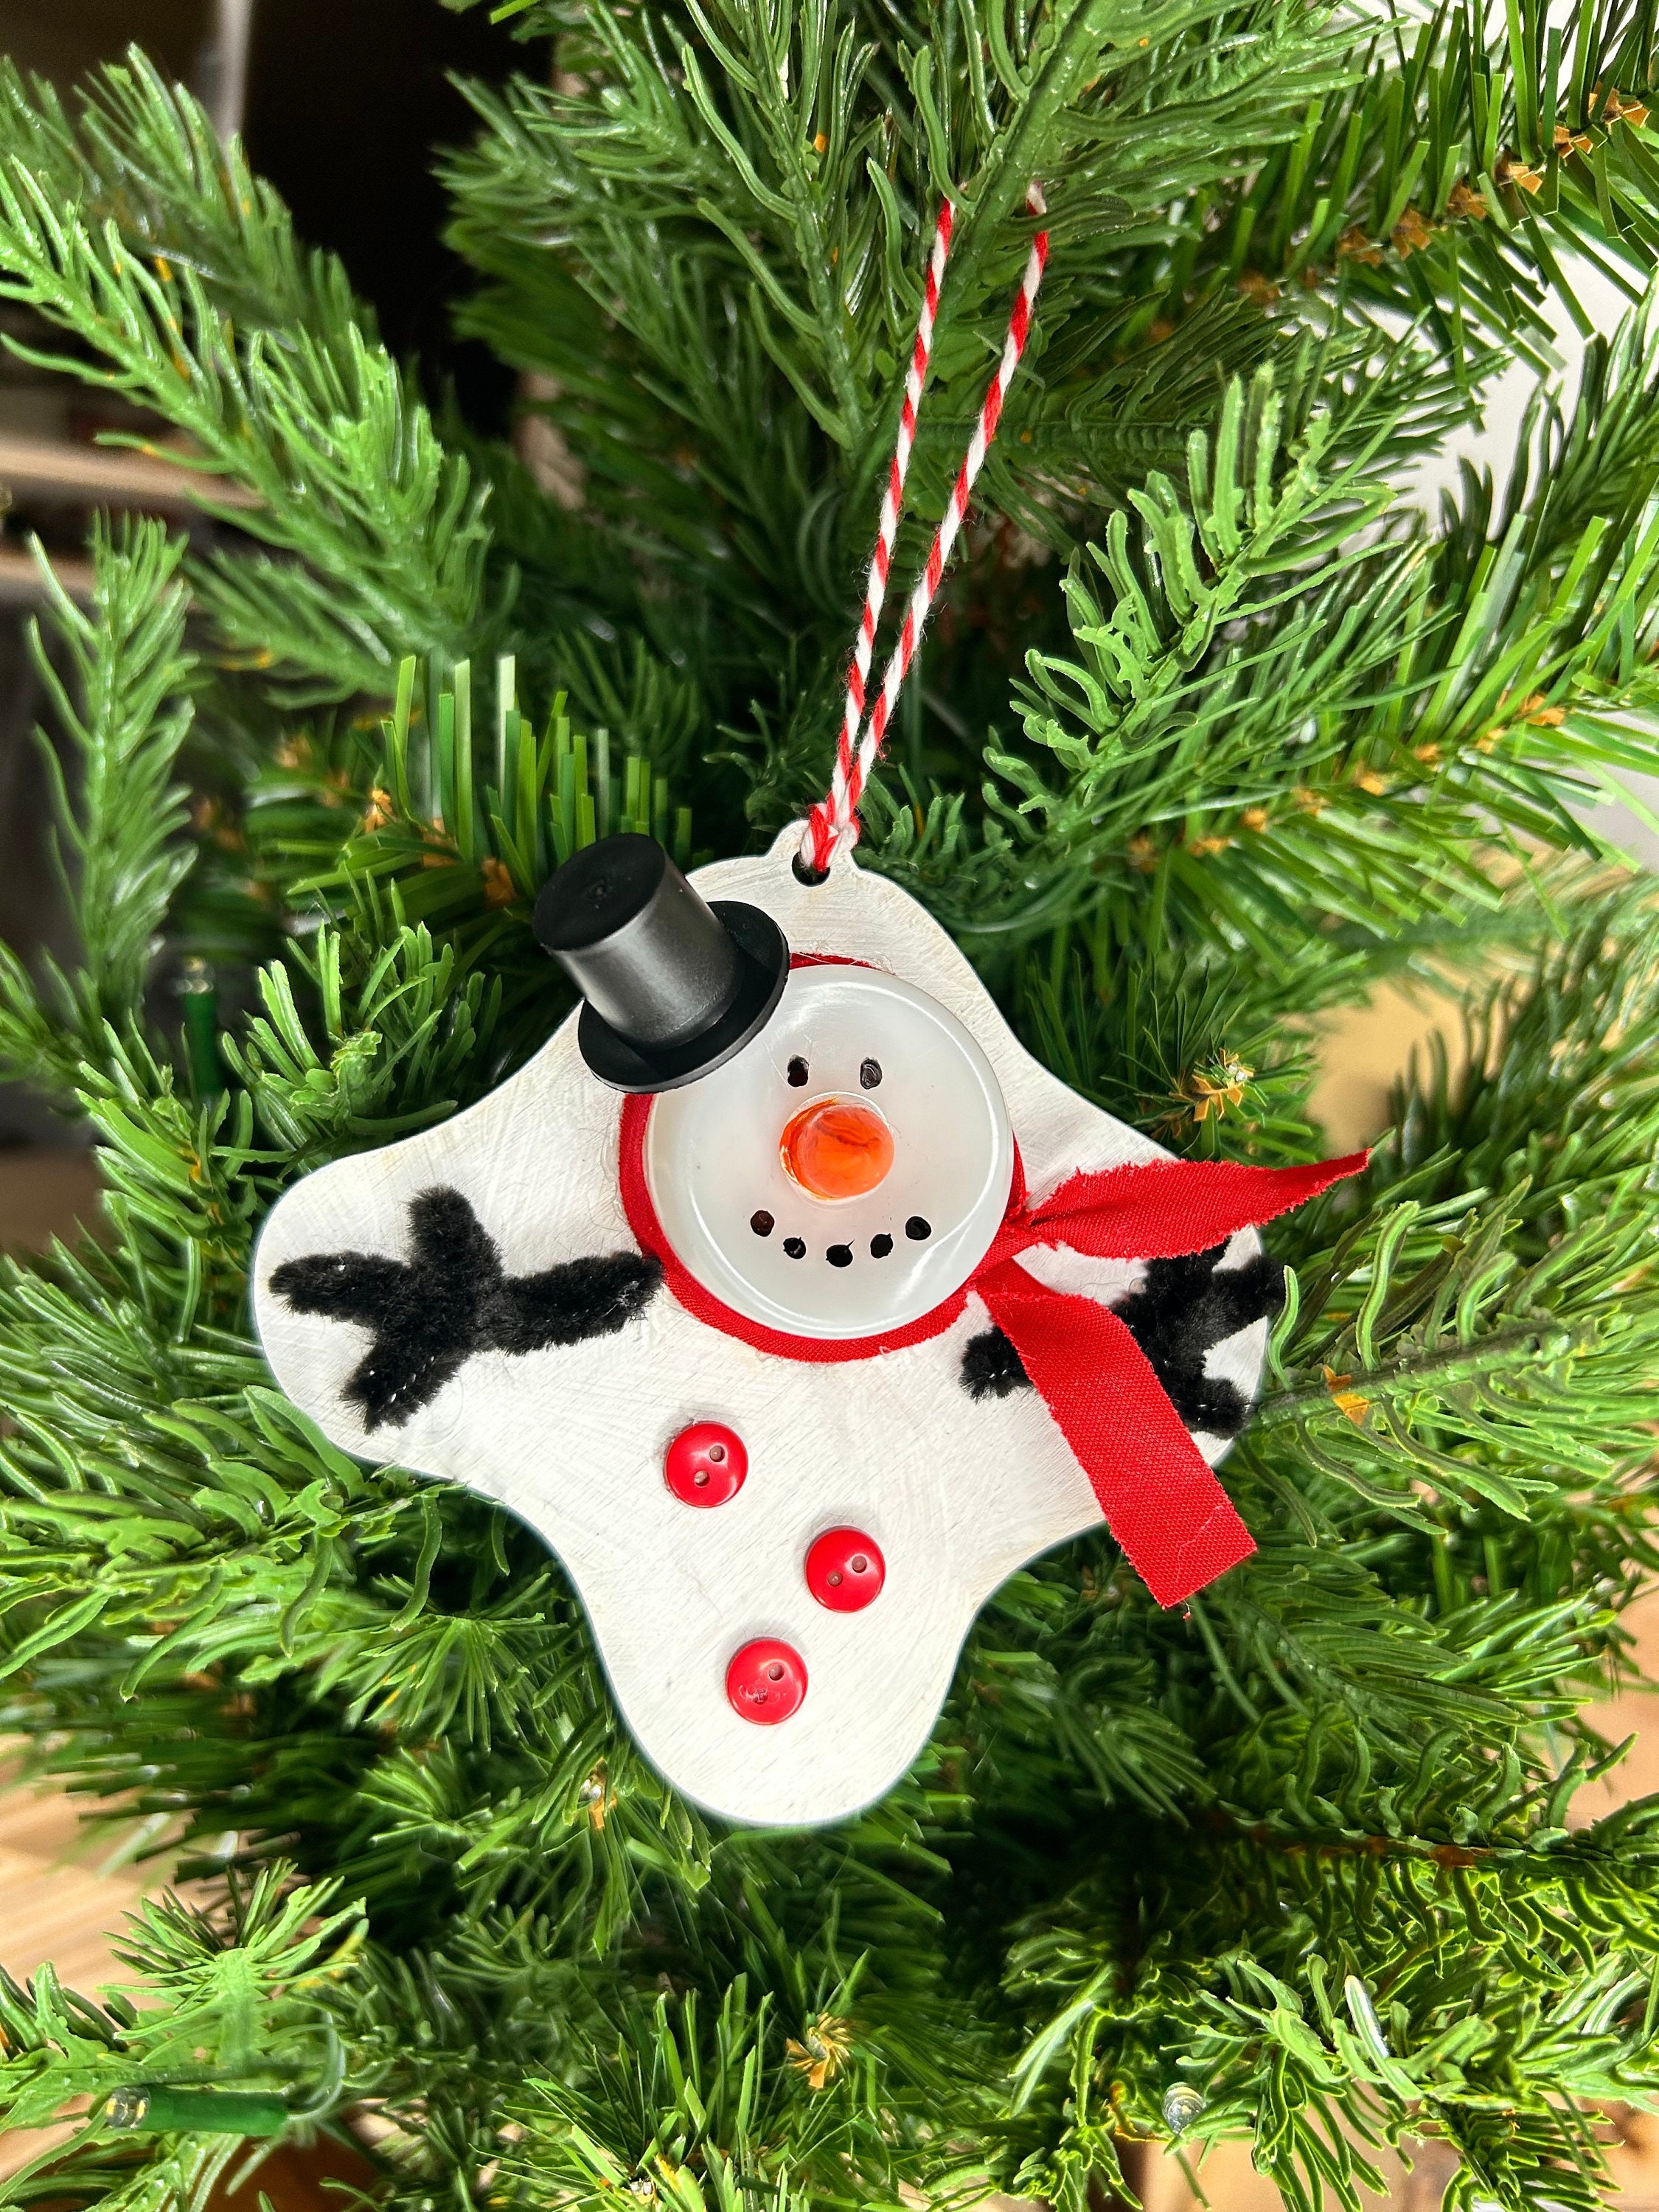 Aleene's Original Glues - DIY Mini Snowman Light Ornaments